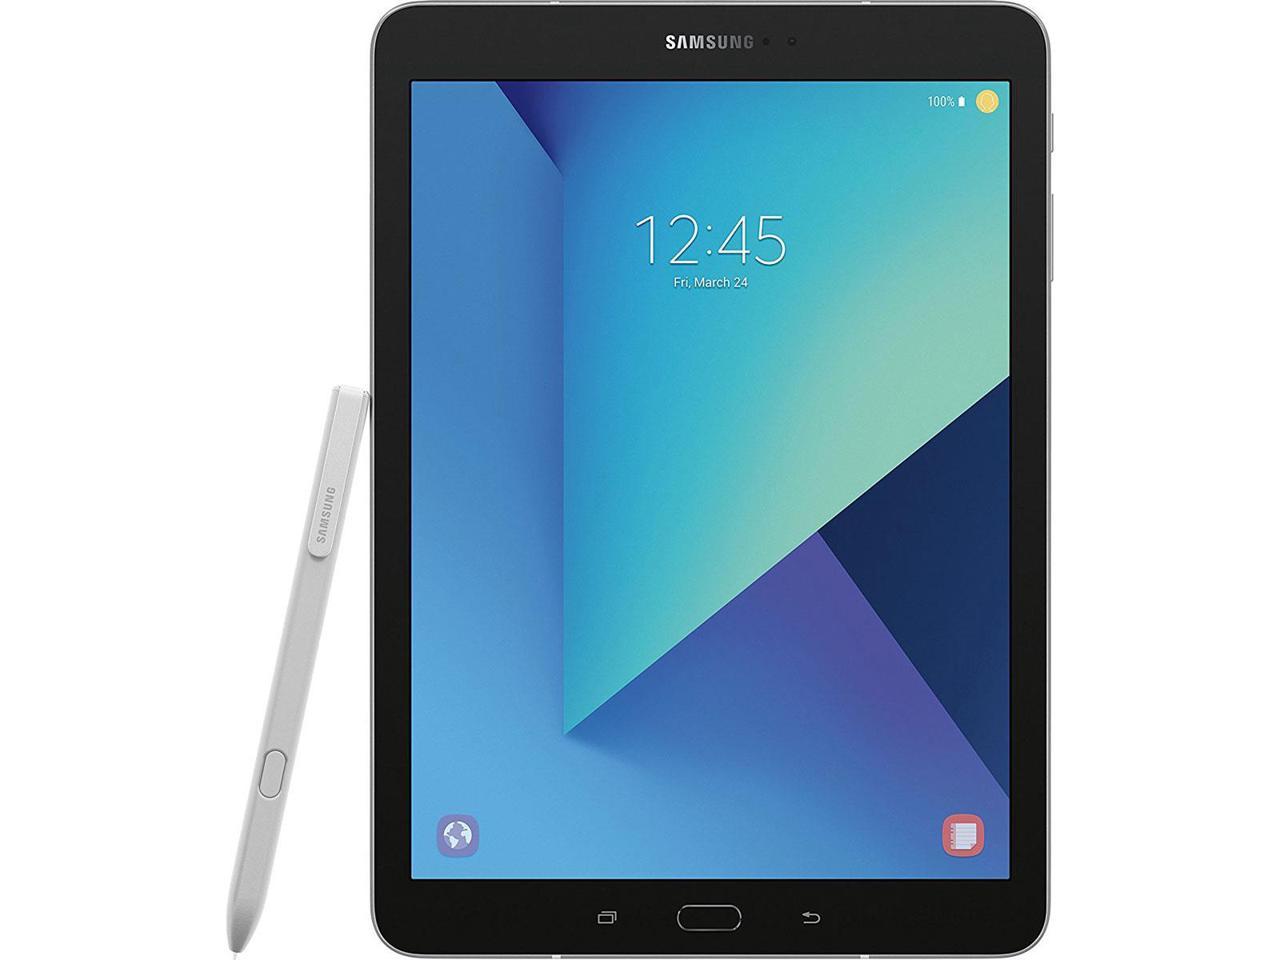 SAMSUNG Galaxy Tab S3 SM-T820NZSAXAR Qualcomm APQ8096 (2.15 GHz) 4 GB Memory 32 GB Flash Storage 9.7" 2048 x 1536 Tablet with S Pen Android 7.0 (Nougat) Silver